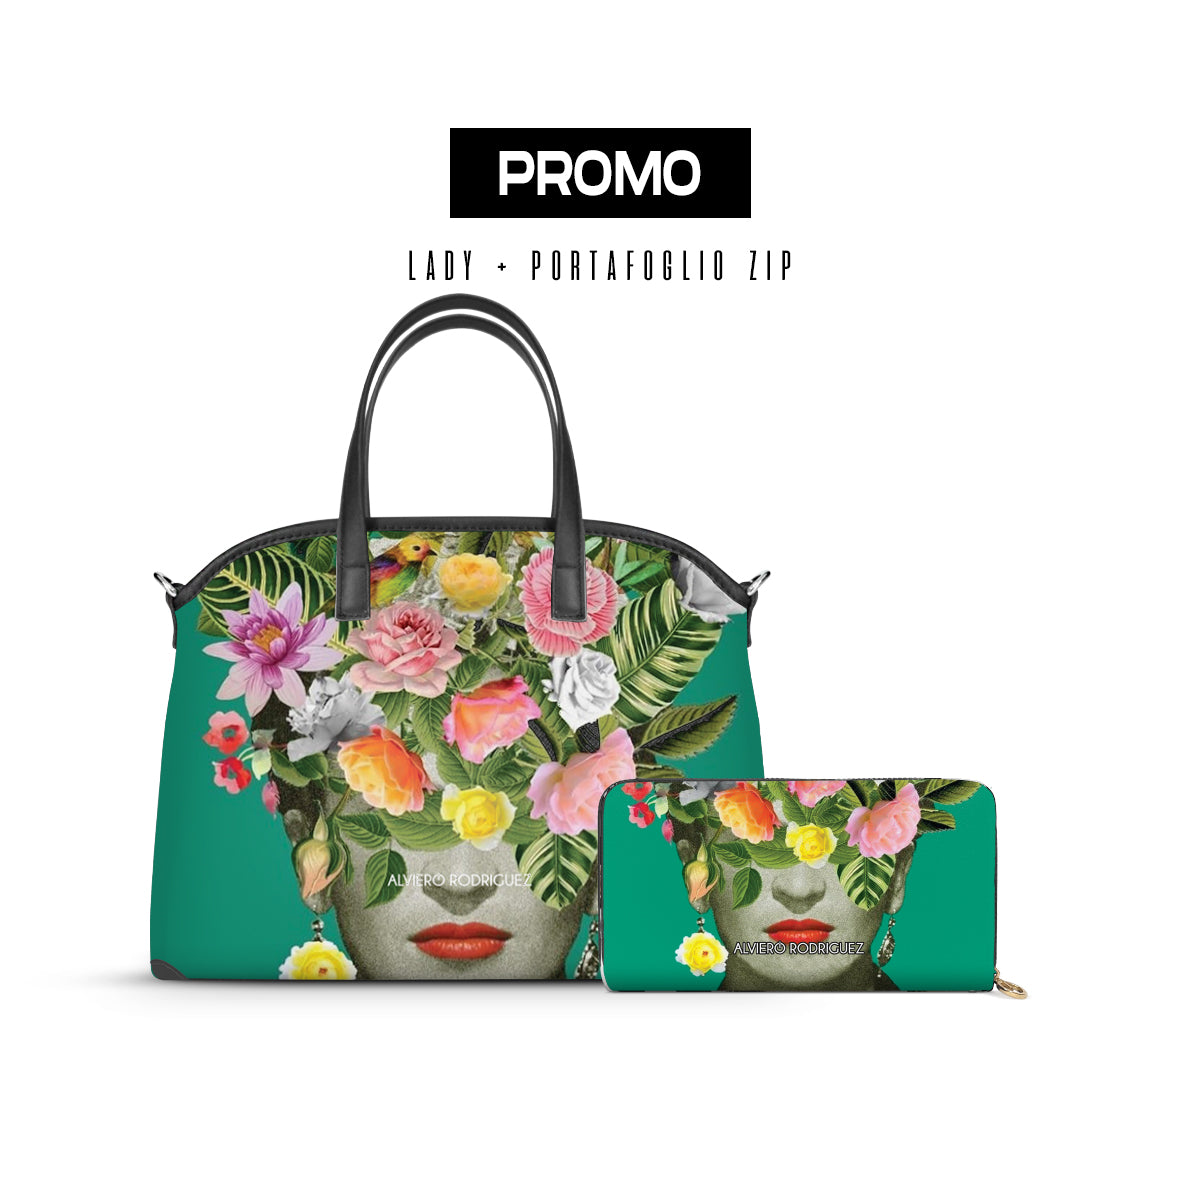 Promo Lady + Portafoglio Zip Frida Flower